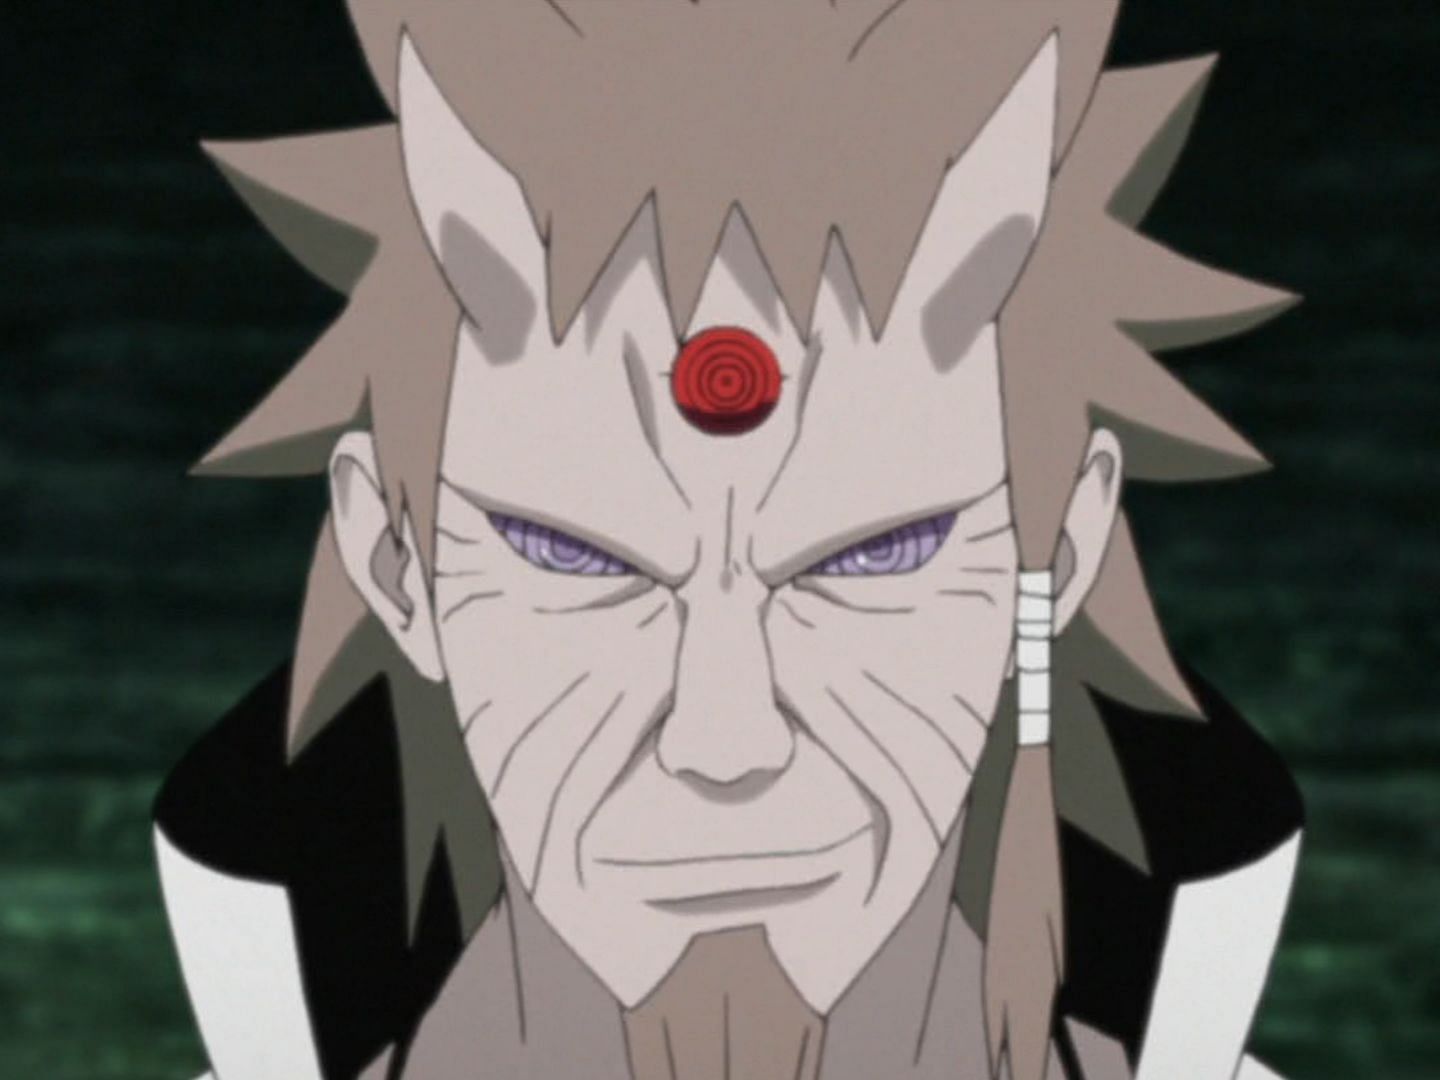 Hagoromo as he appears in Naruto Shippuden (Image via Pierrot)